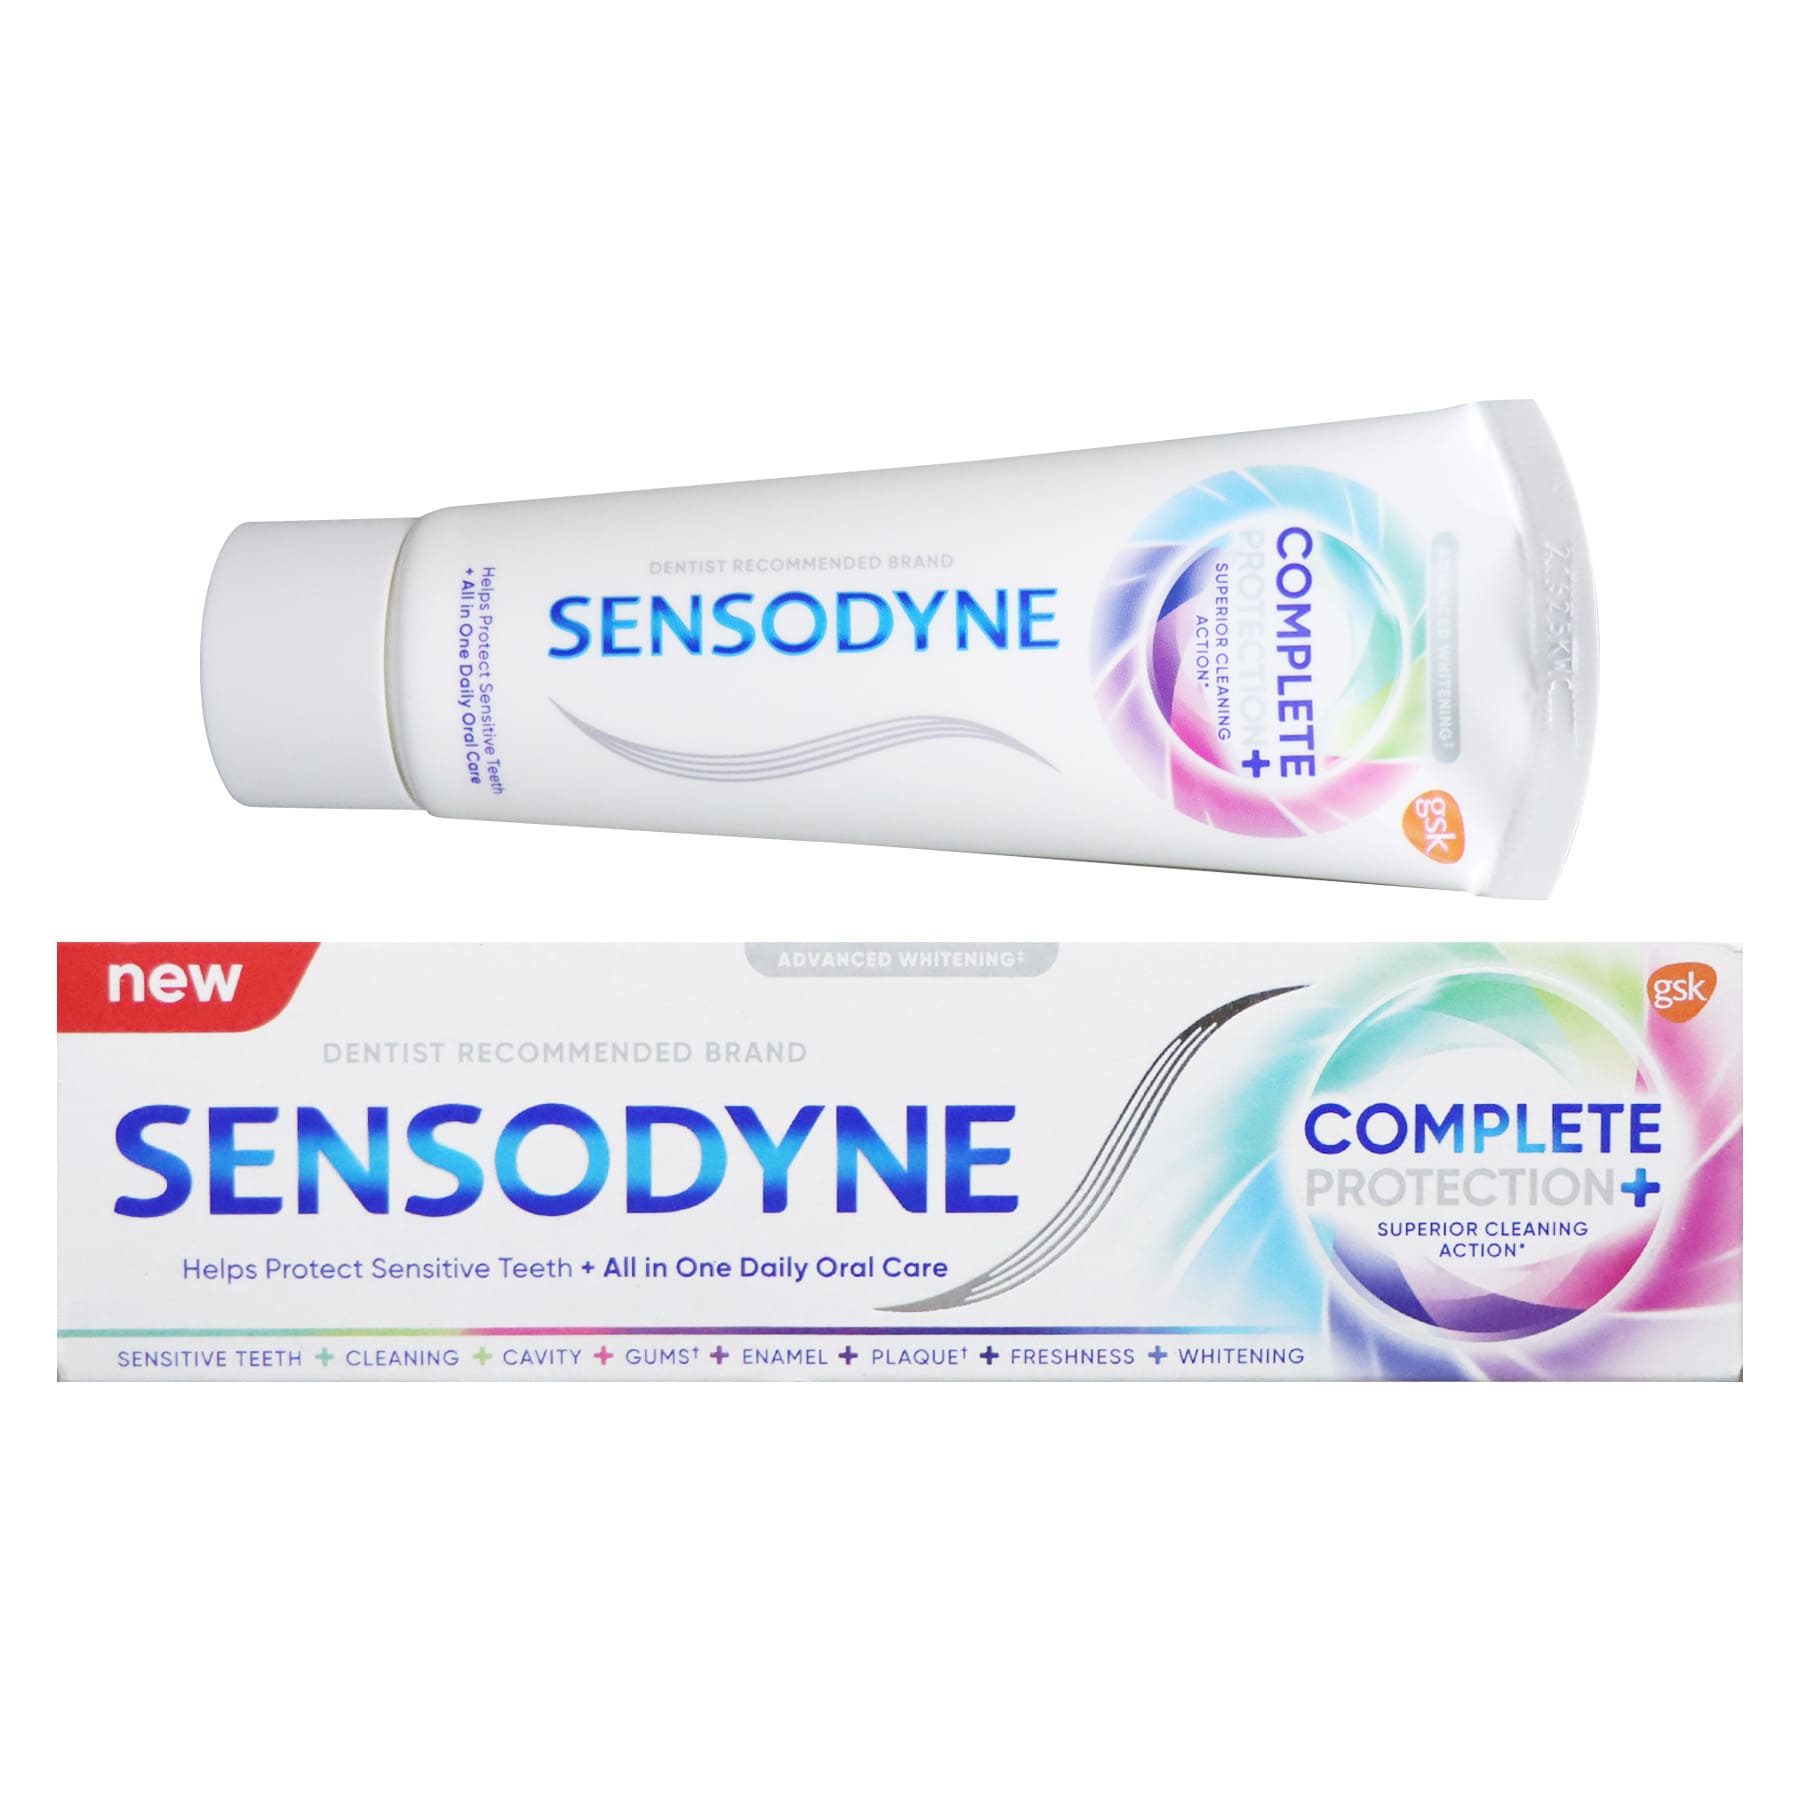 Sensodyne 舒適達 全方位防護抗敏牙膏 75毫升 (美白配方)